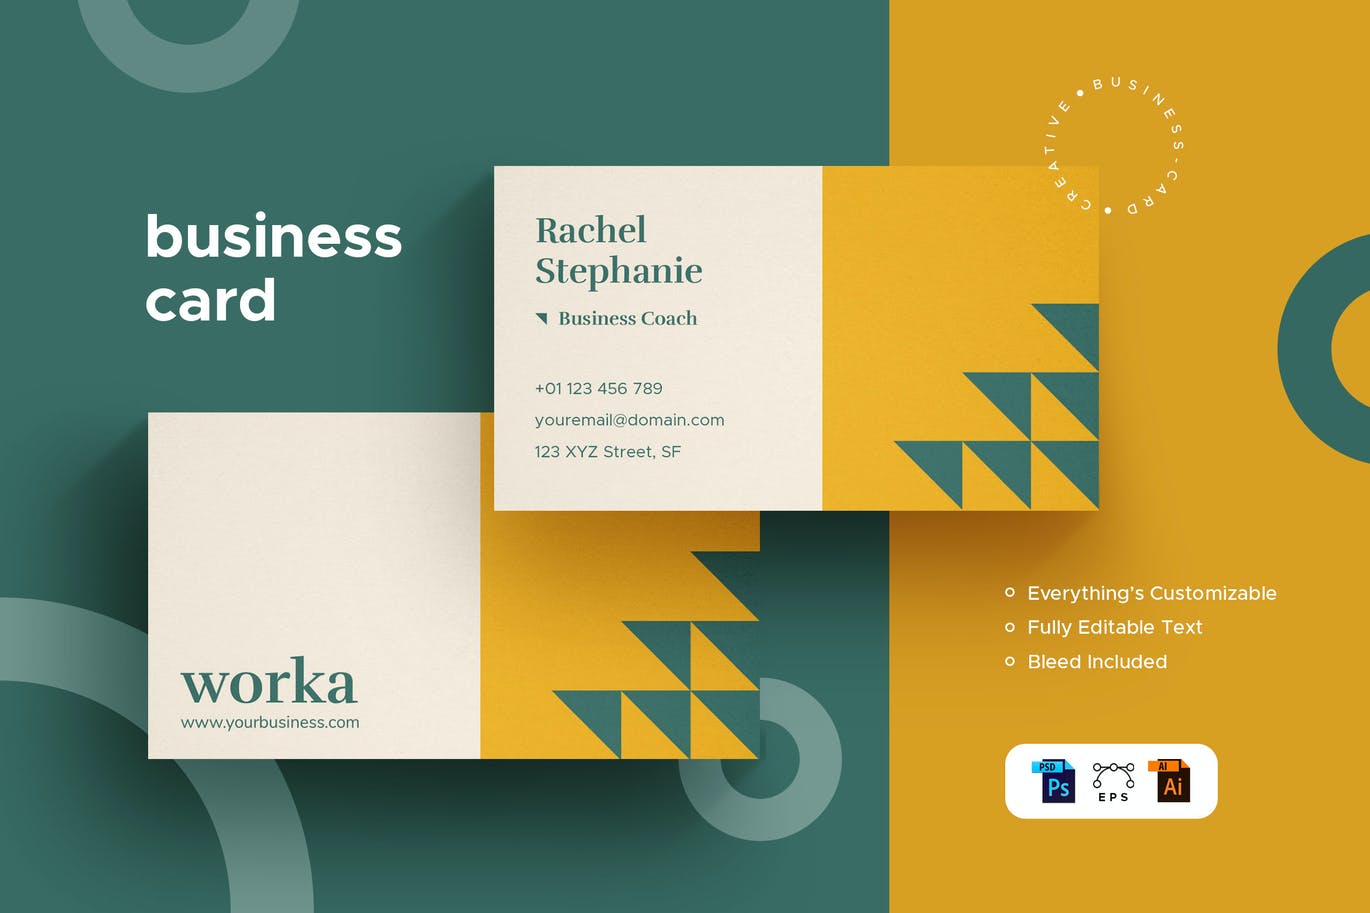 Worka - Business Card - Stationery Kit